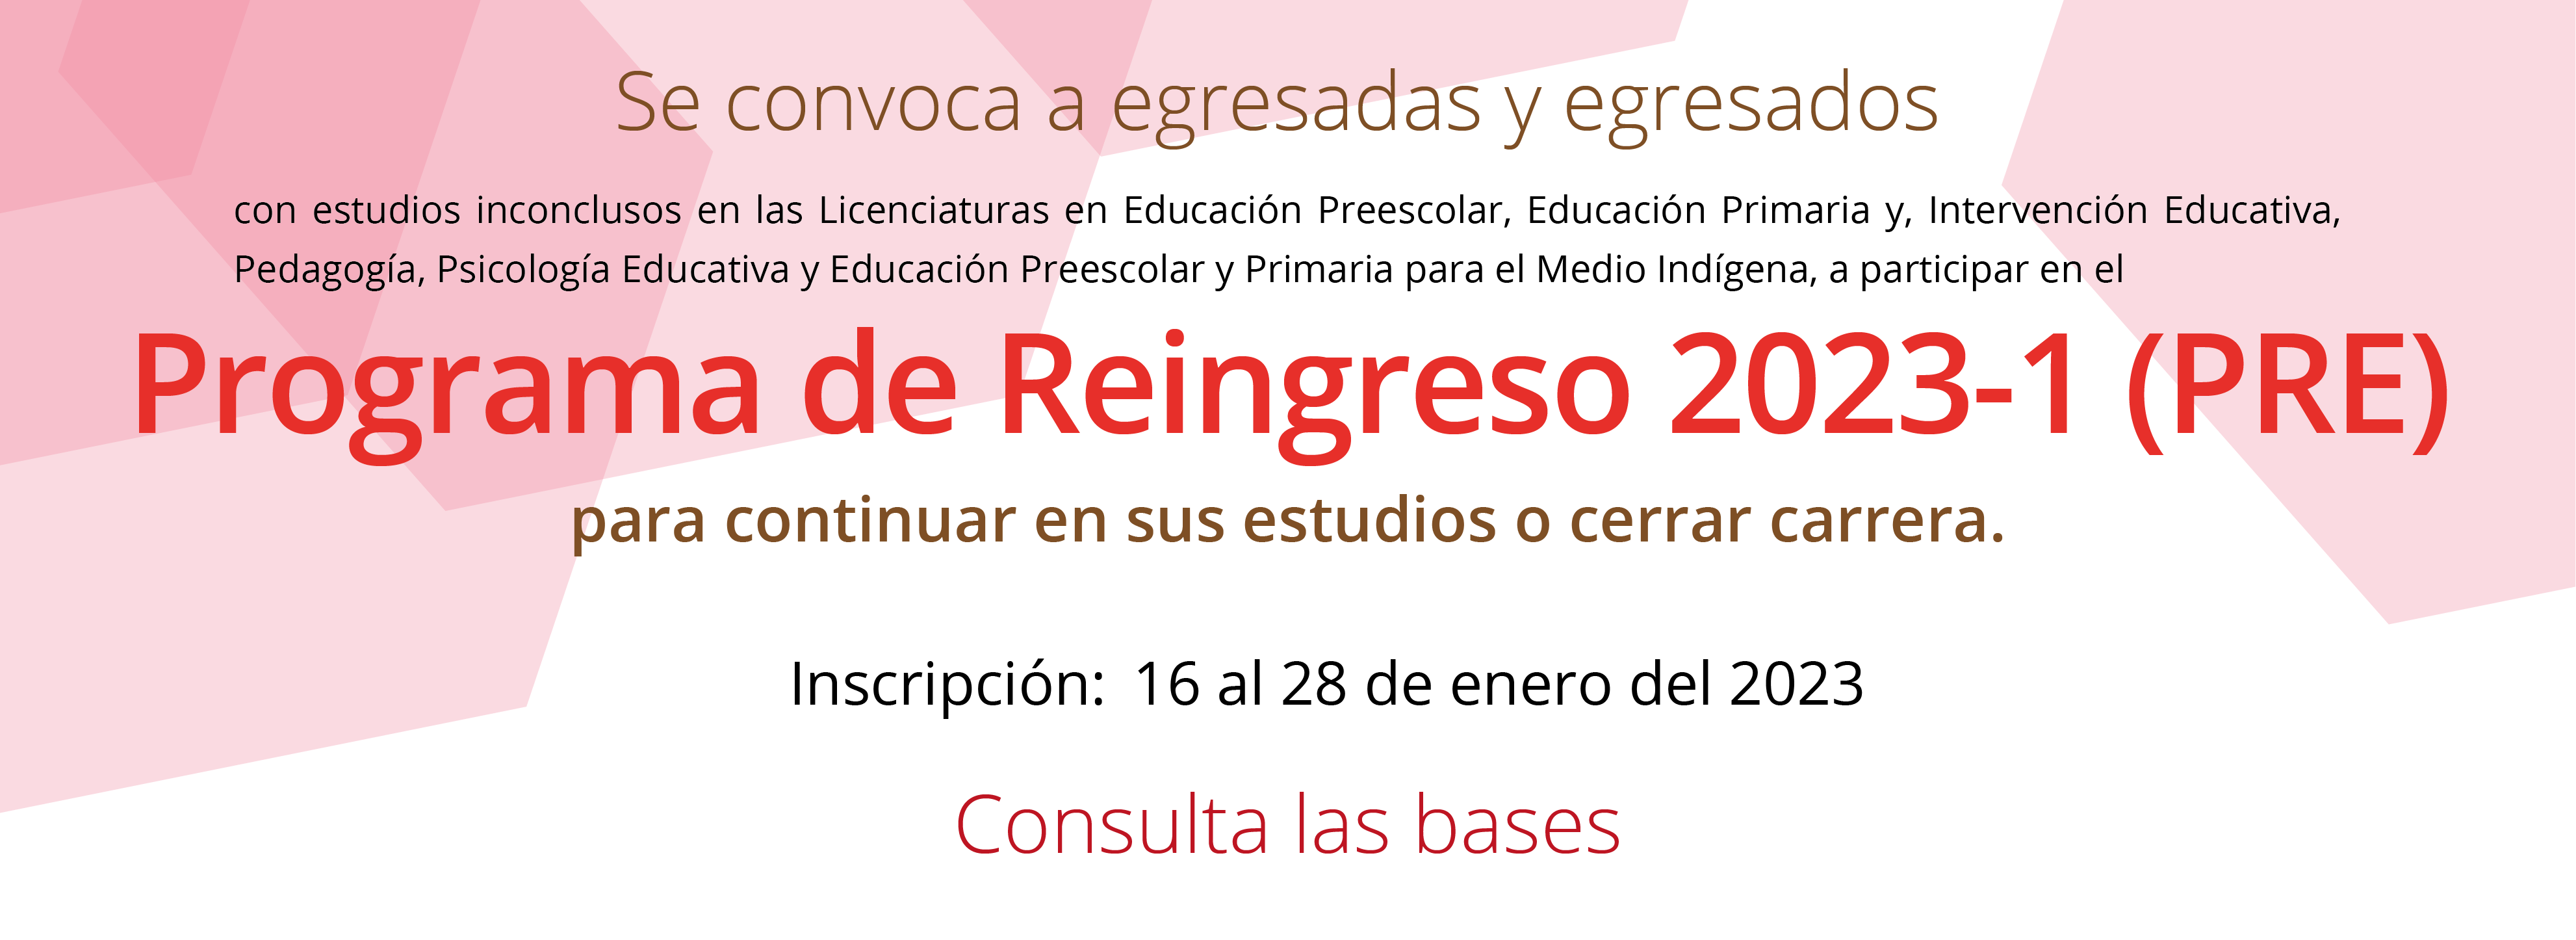 Convocatoria_Programa_de_Reingreso_2023-1_PRE_Egresadosa_banner_web